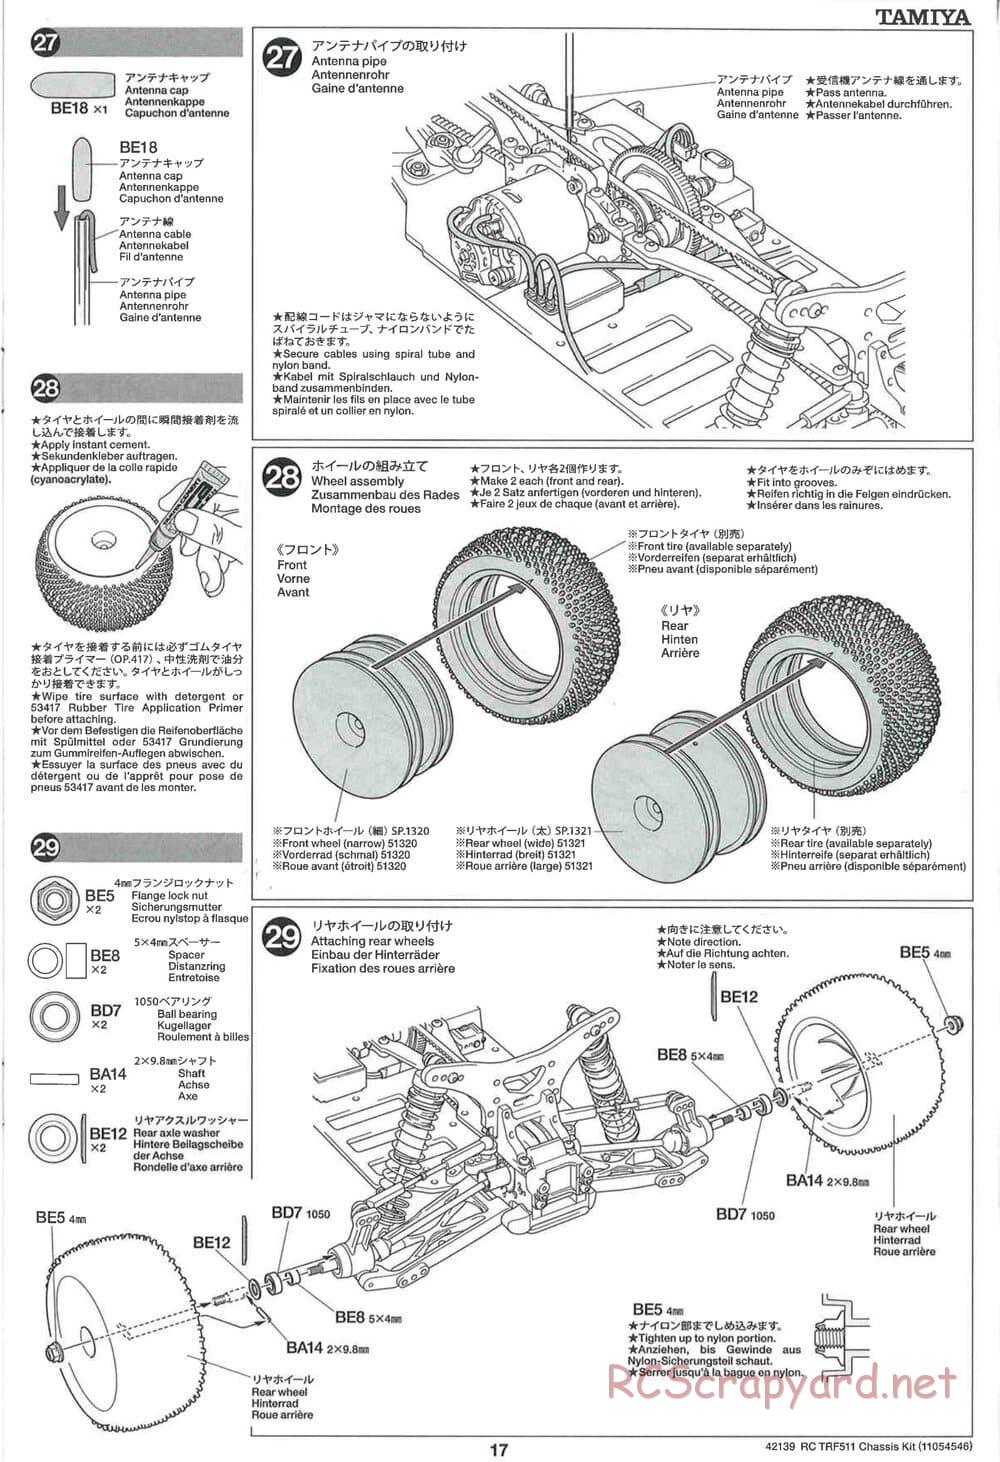 Tamiya - TRF511 Chassis - Manual - Page 17